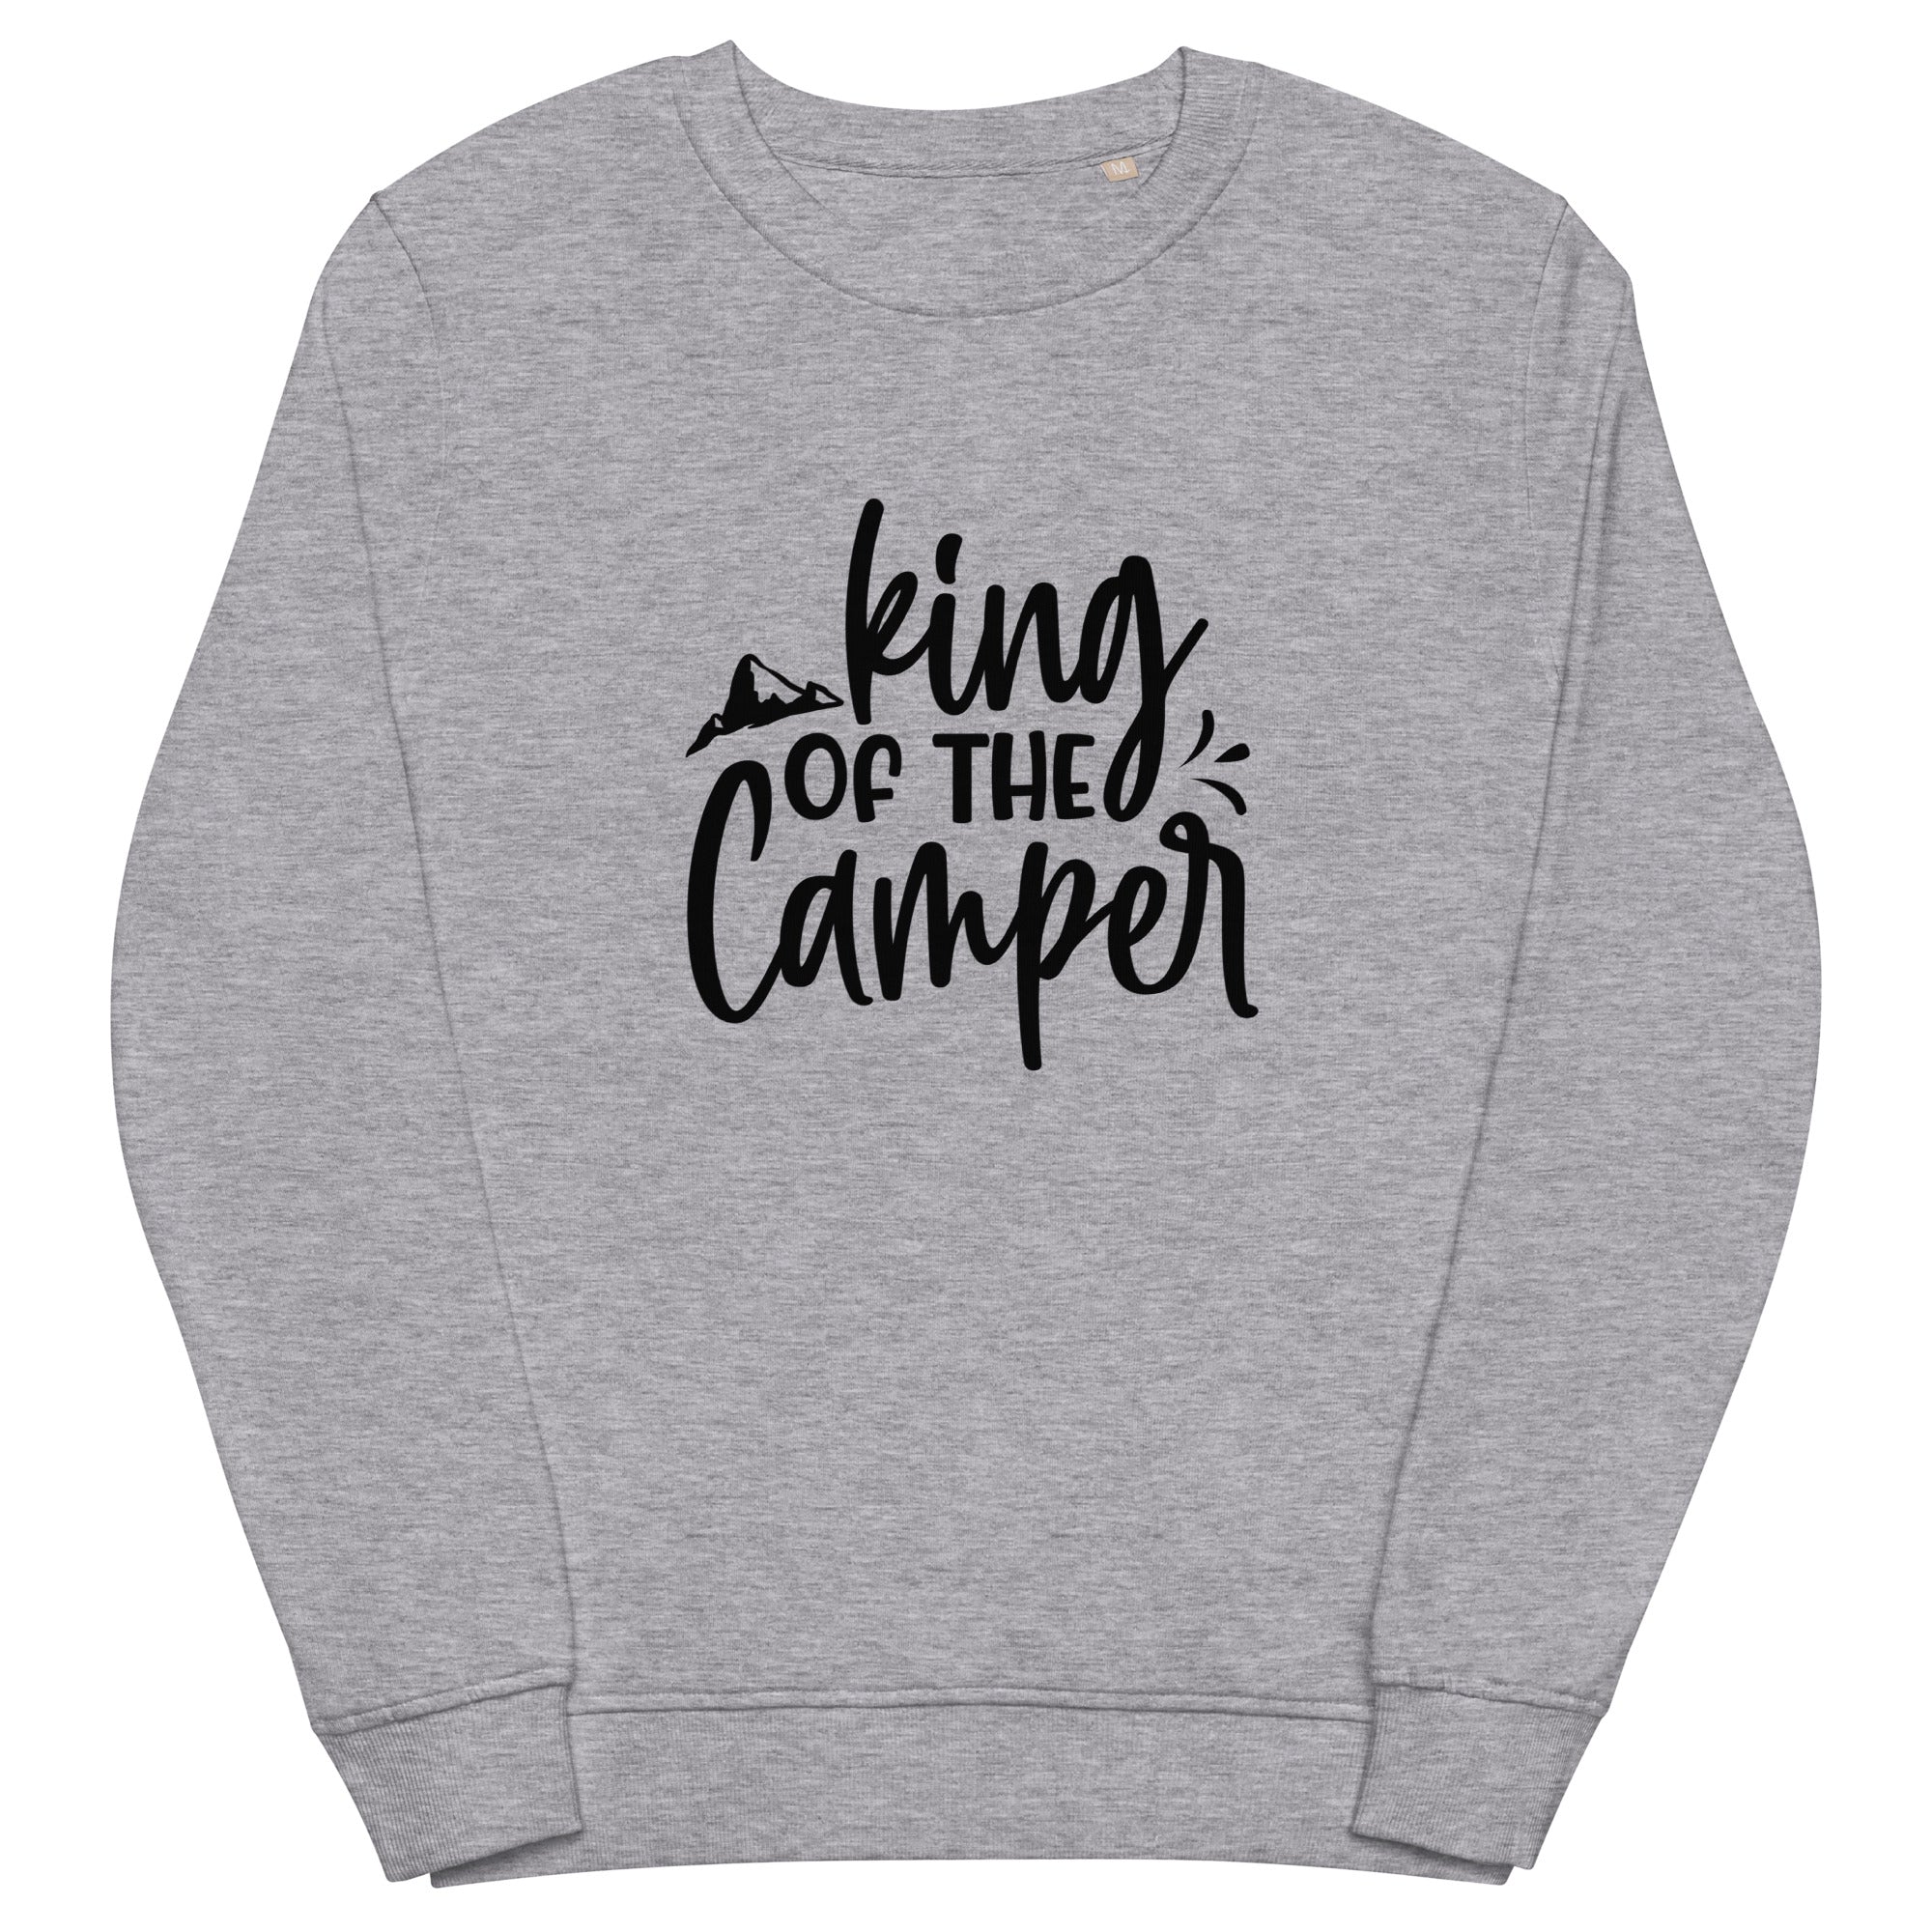 King of the Camper - Sweatshirt